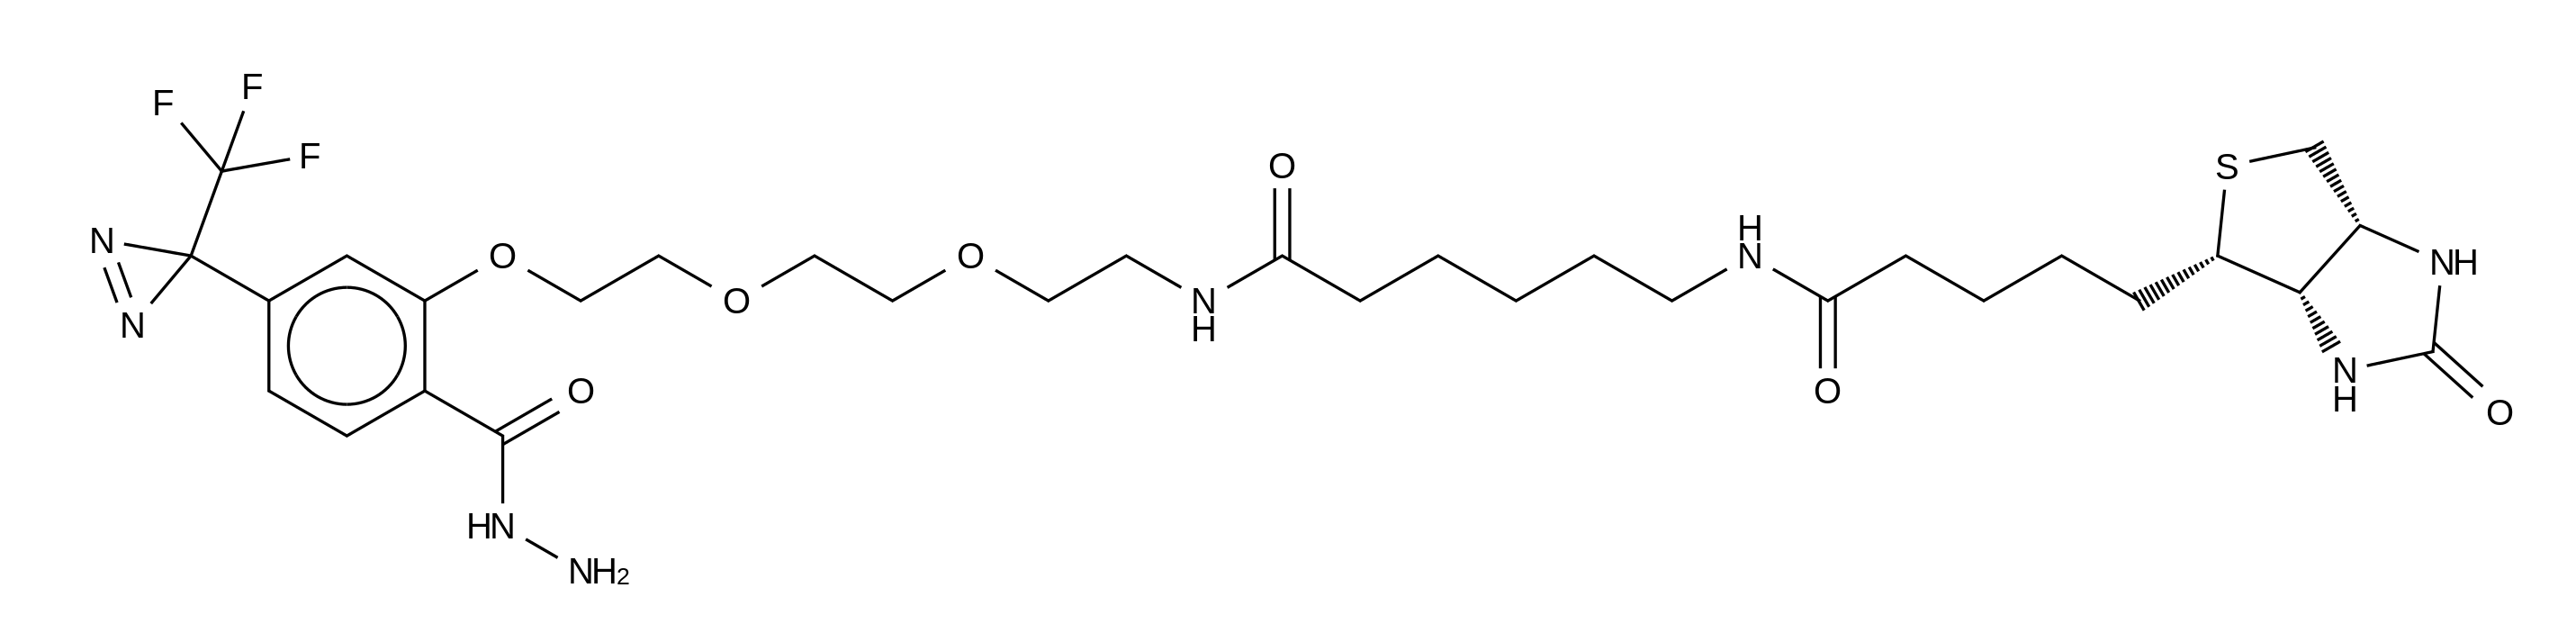 2-[2-[2-[2-[6-(Biotinylaminohexanoyl]aminoethoxy]ethoxy]ethoxy]-4-[3-(trifluoromethyl)-3H-diazirin-3-yl]benzoic Acid Hydrazide